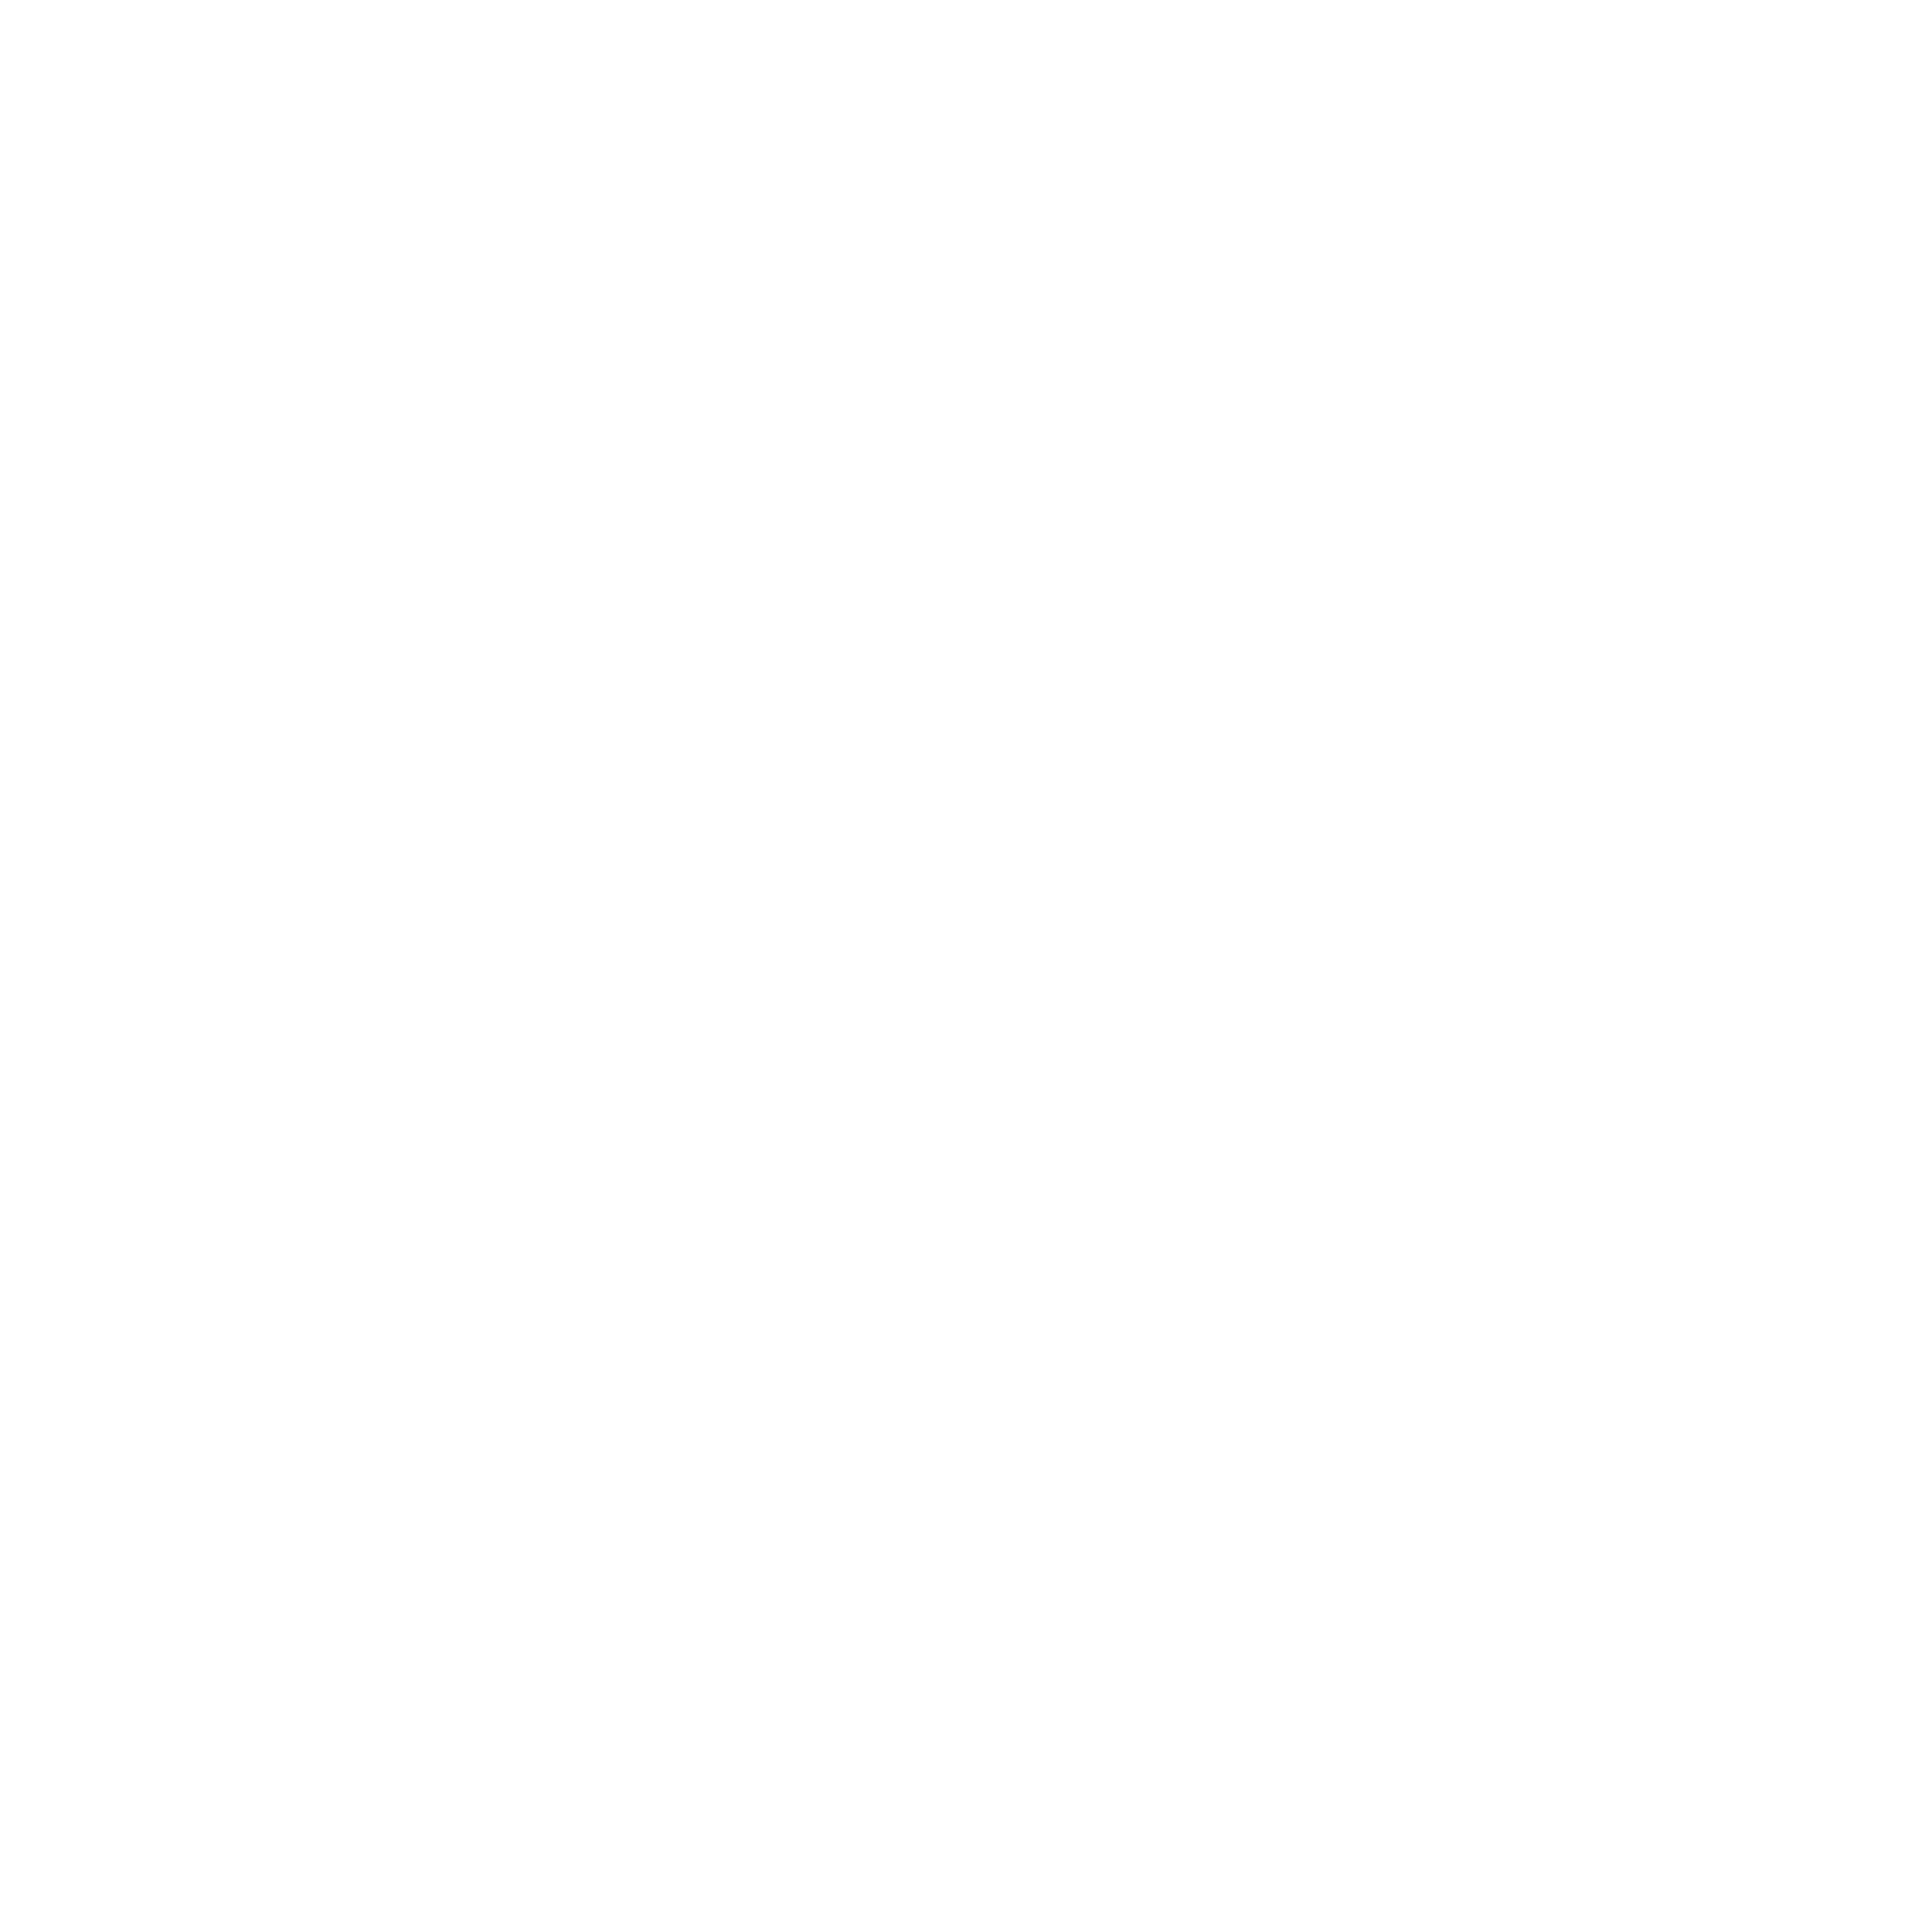 Foot Action Logo - Footaction USA Logo PNG Transparent & SVG Vector